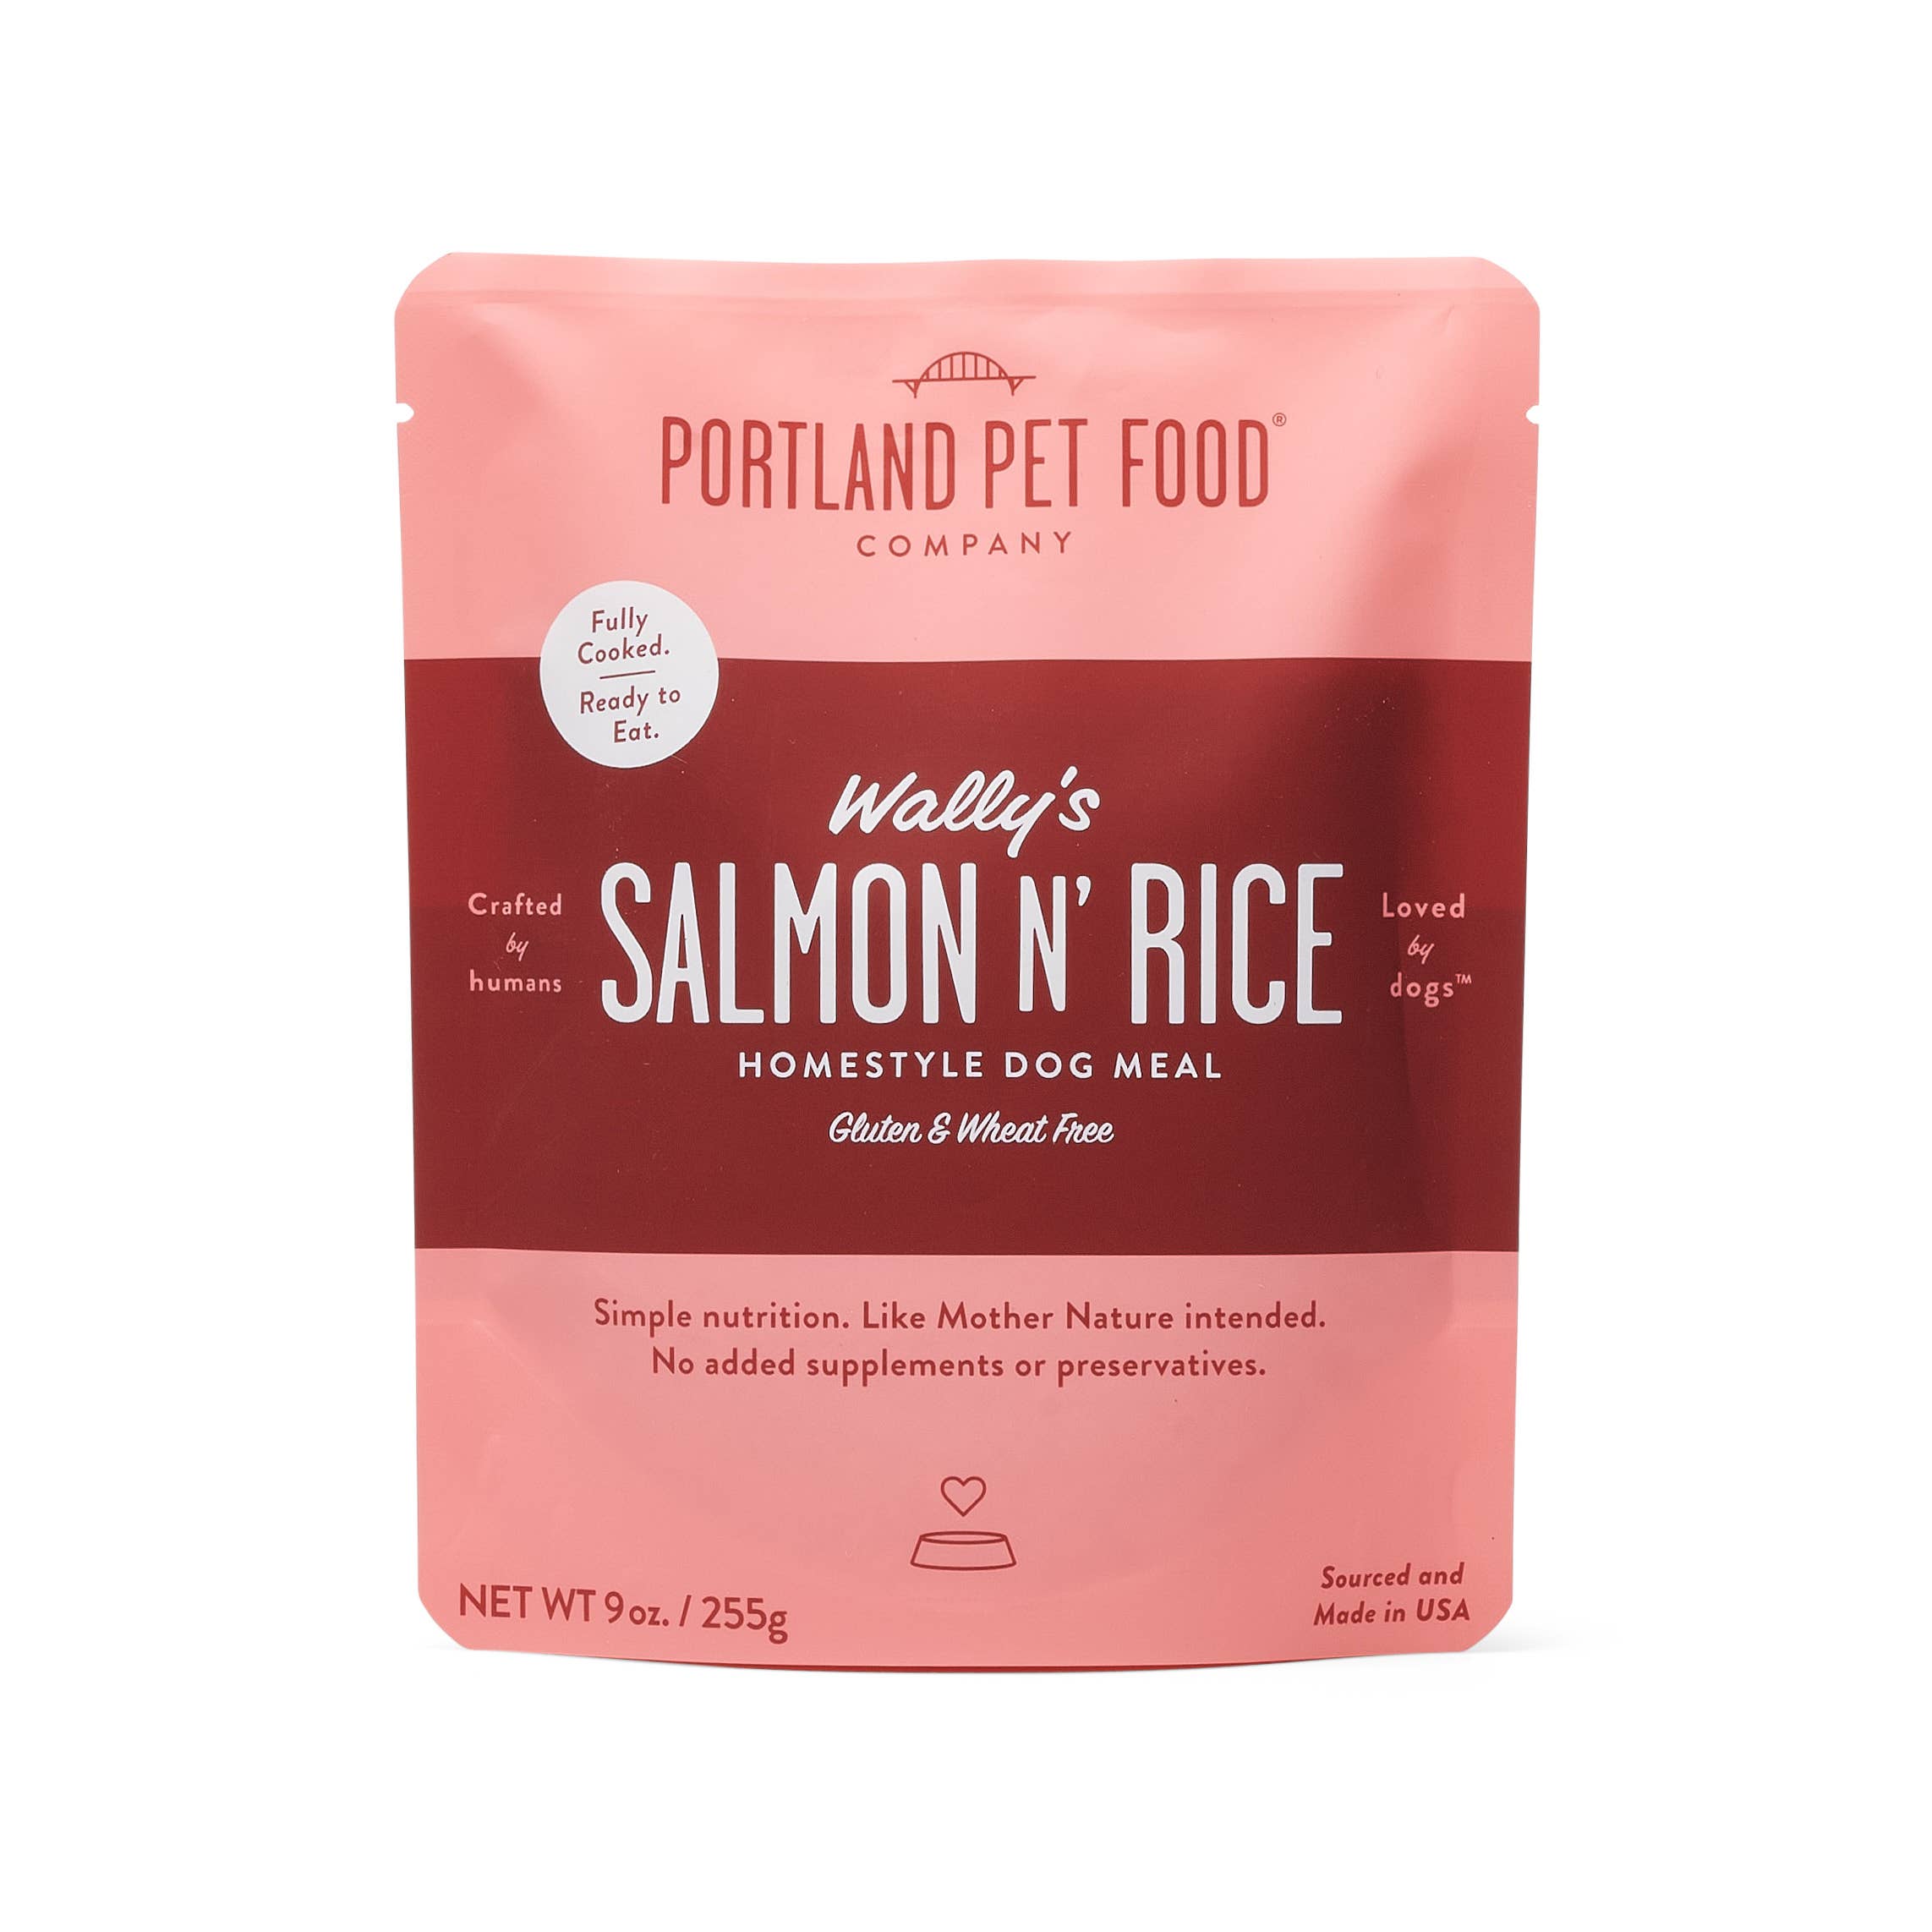 Portland Pet Food Company - Wally's Salmon N' Rice Homestyle Dog Meal